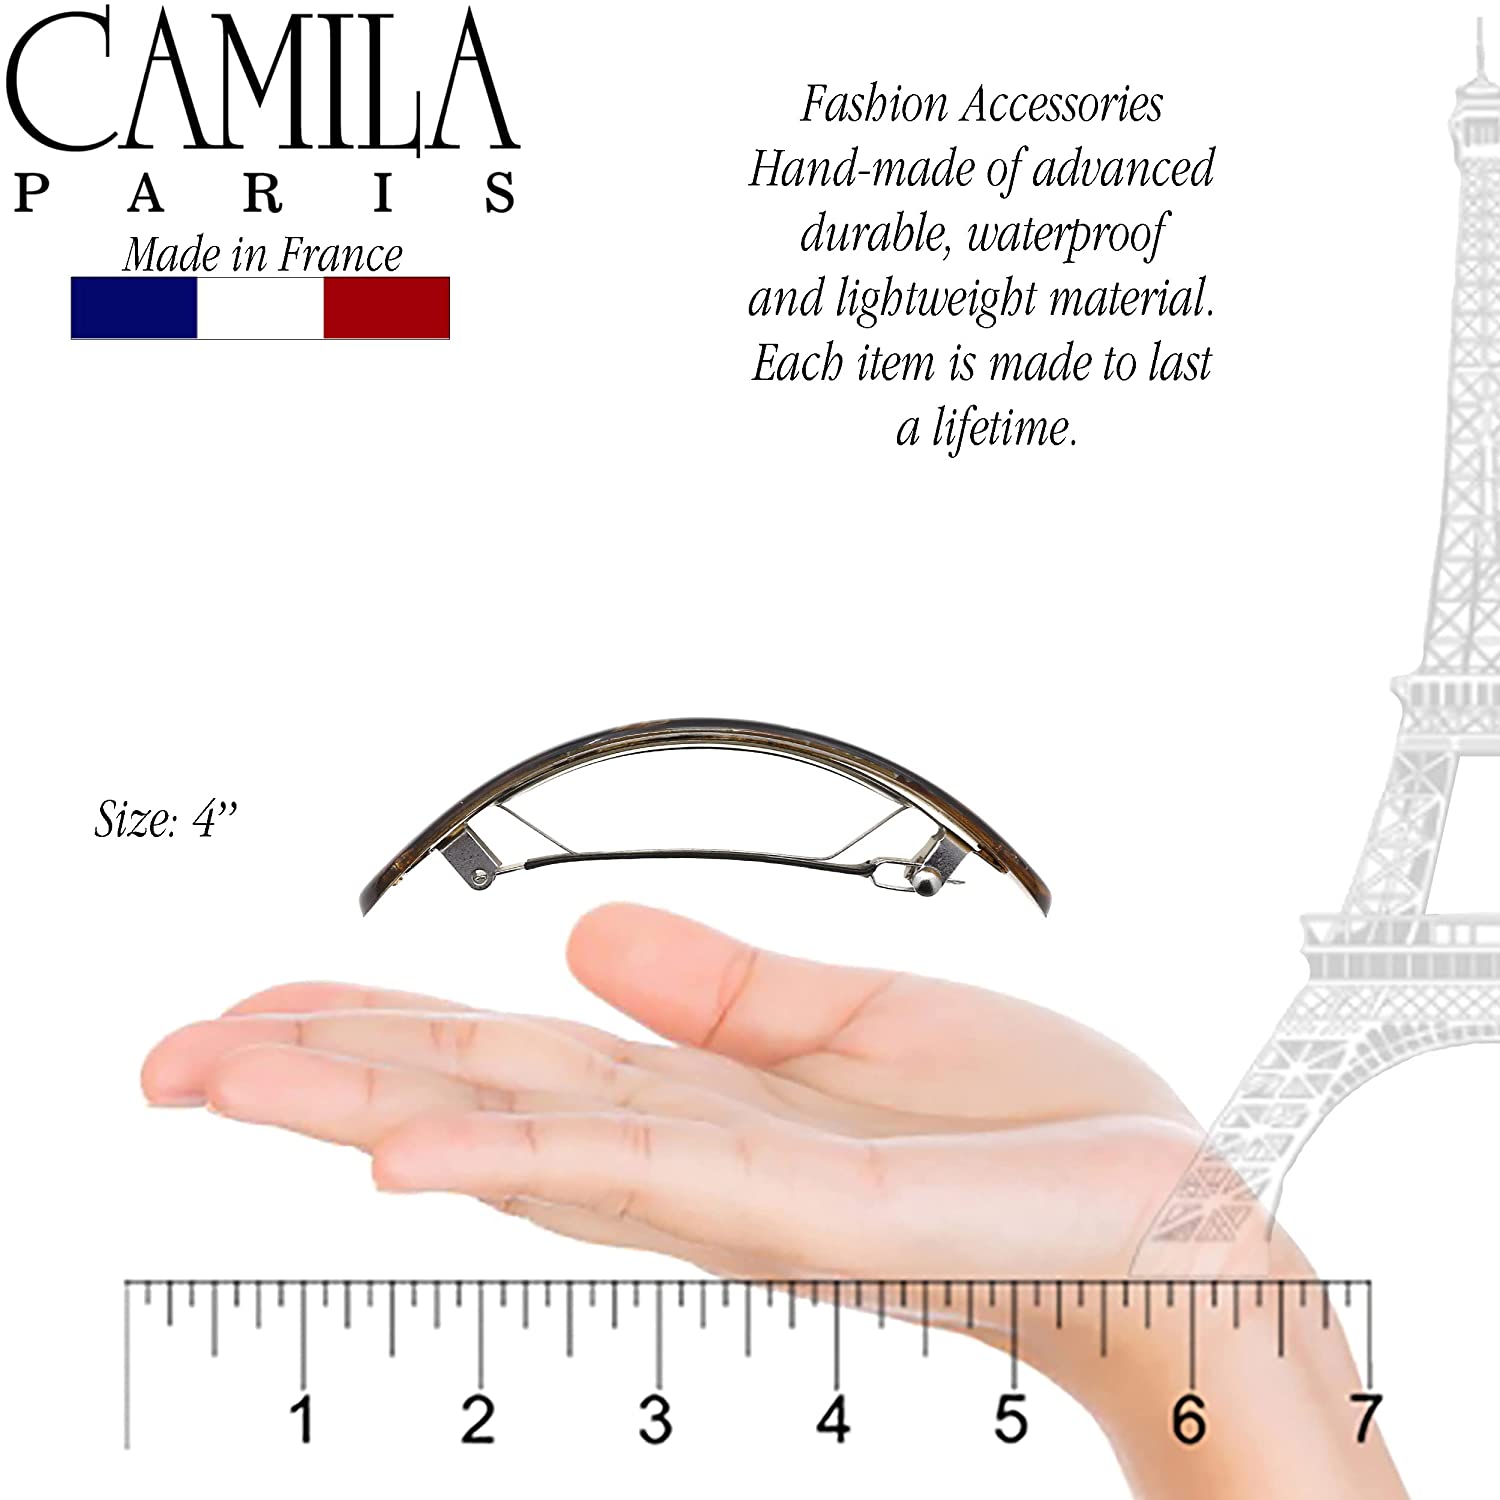 Camila Paris Hair Barrettes Large Hand Painted Oval No-Slip